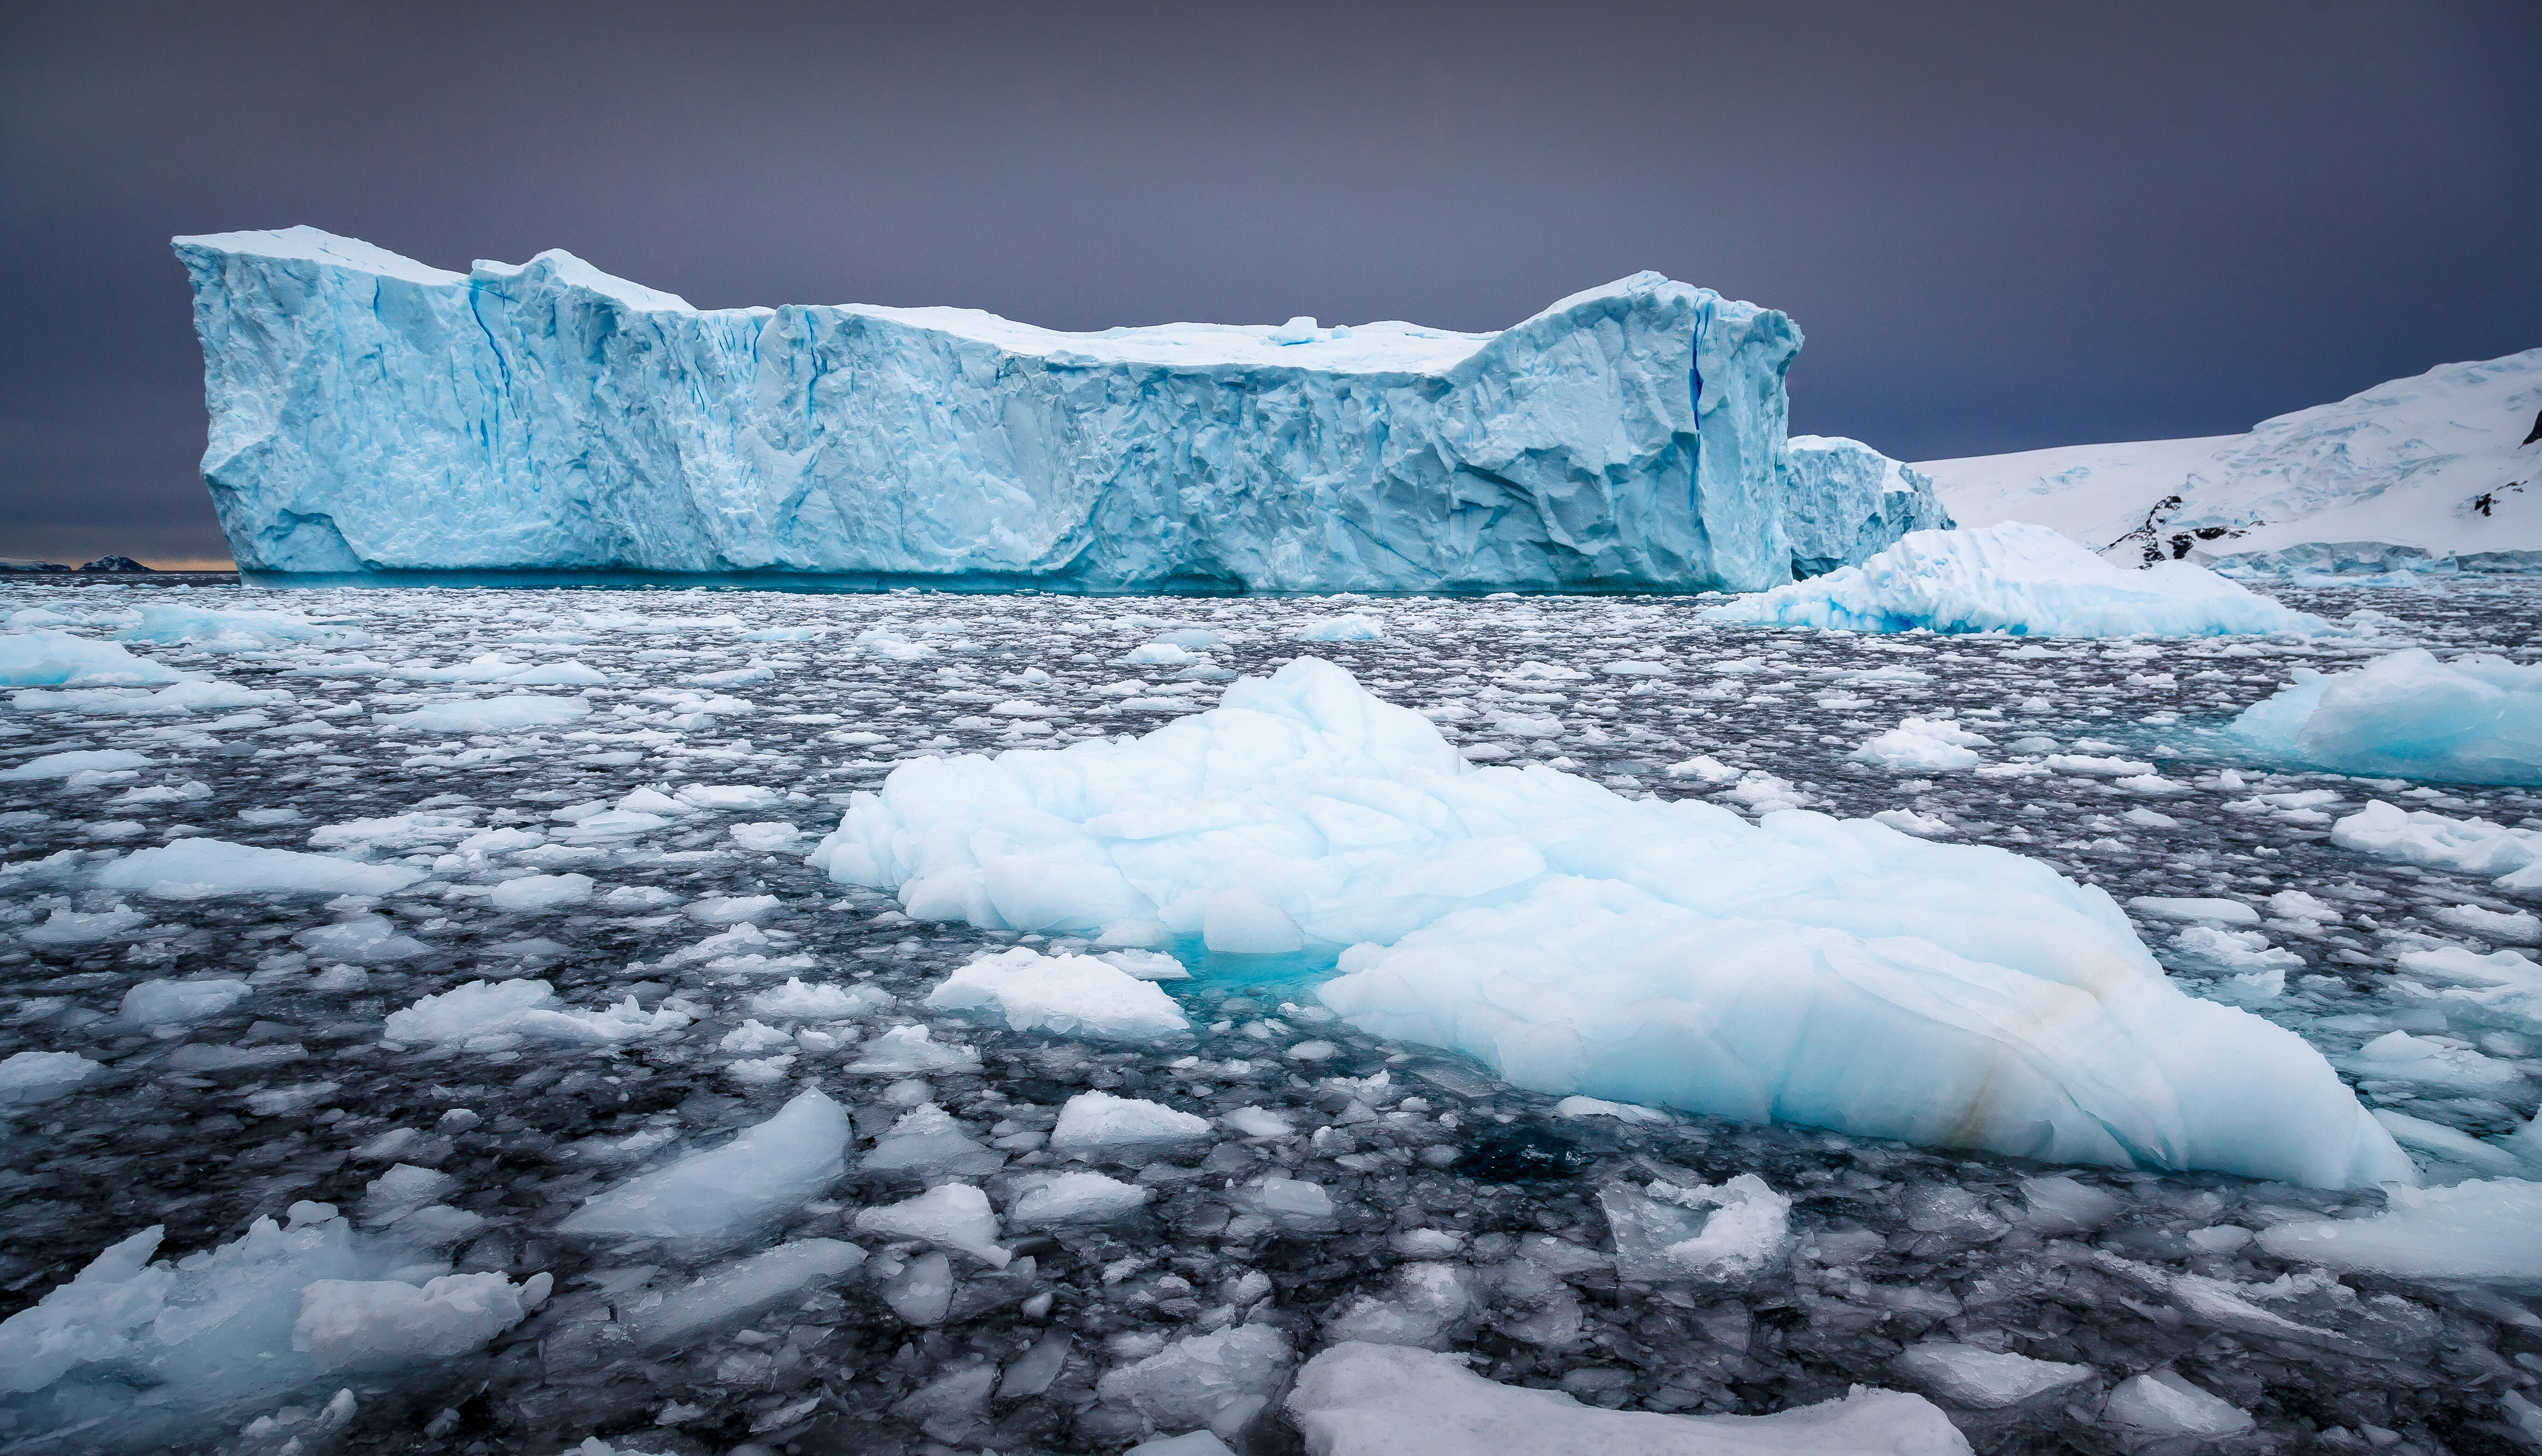 Самую большую площадь занимают ледники. Гренландия ледник Антарктида Арктика Гренландия. Арктика Антарктика Антарктида. Таяние ледников Антарктики. Антарктида Гренландия Арктика Северный Ледовитый океан.